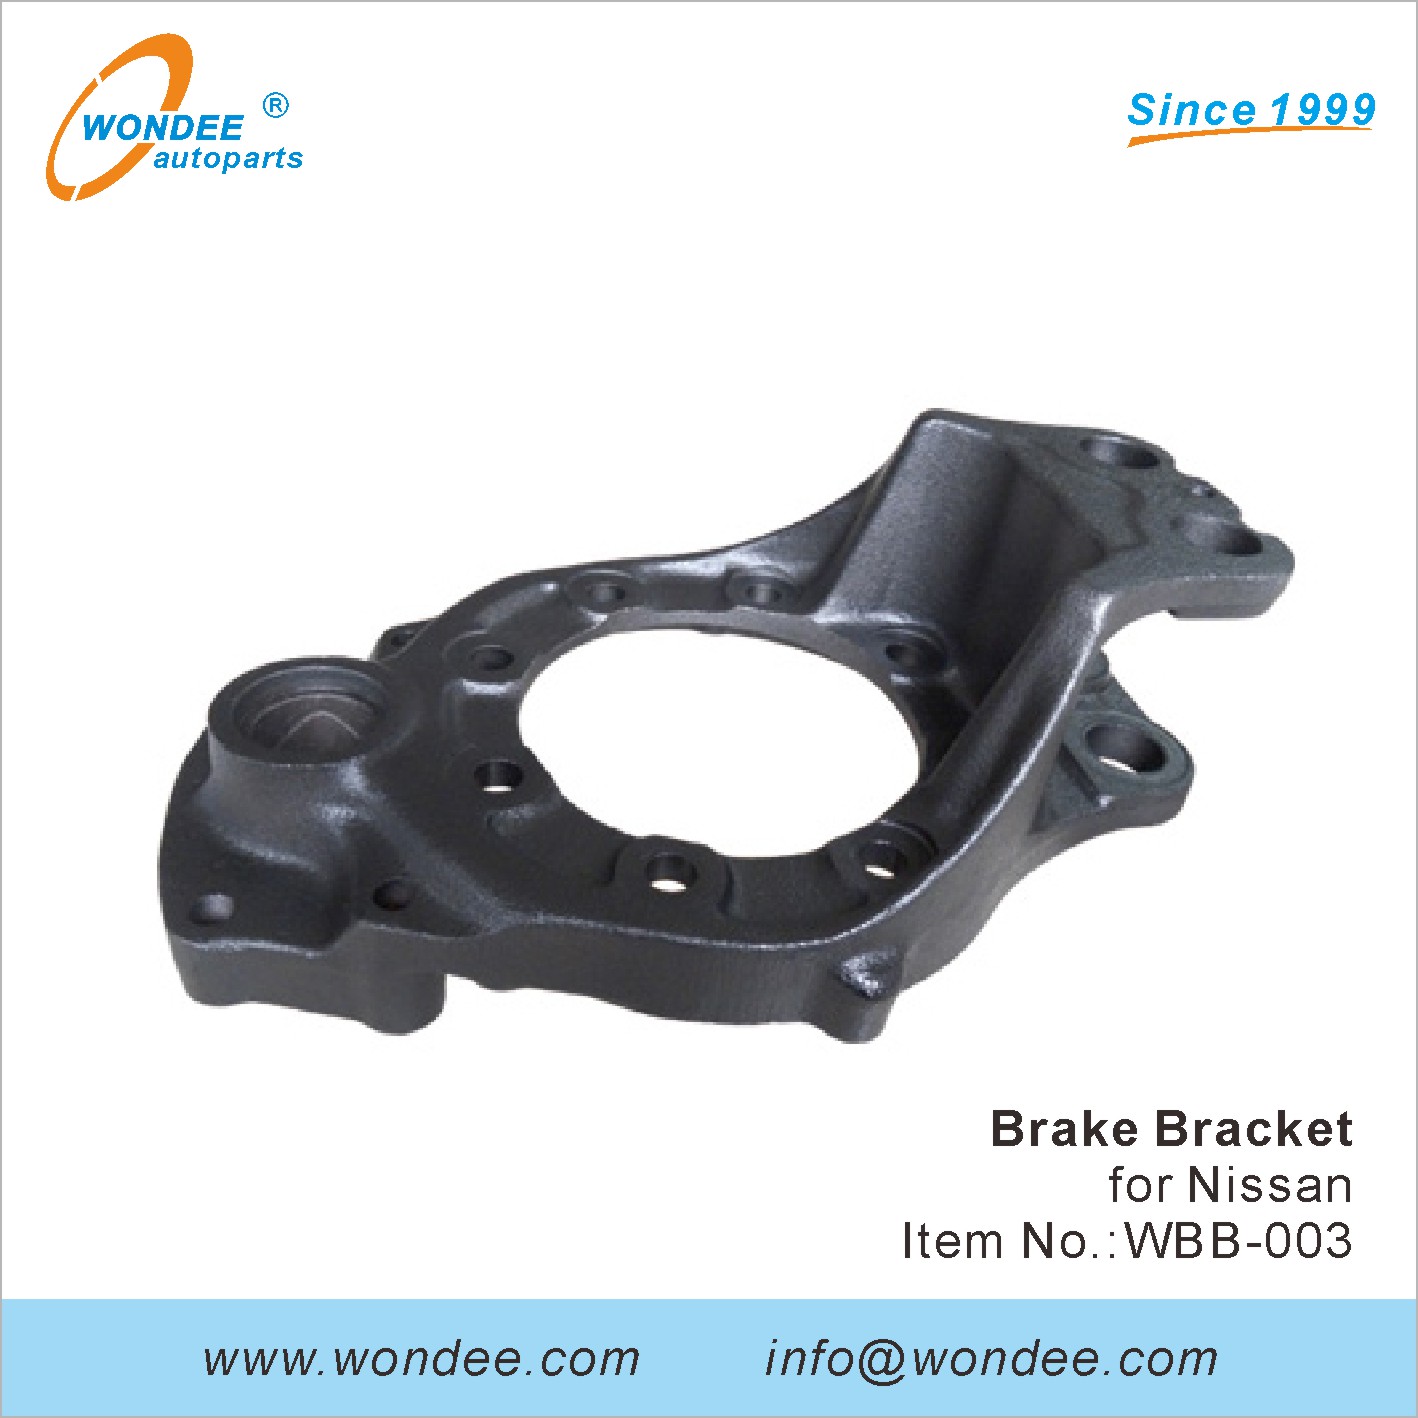 Brake Bracket and Spare Tire Carrier for Trucks